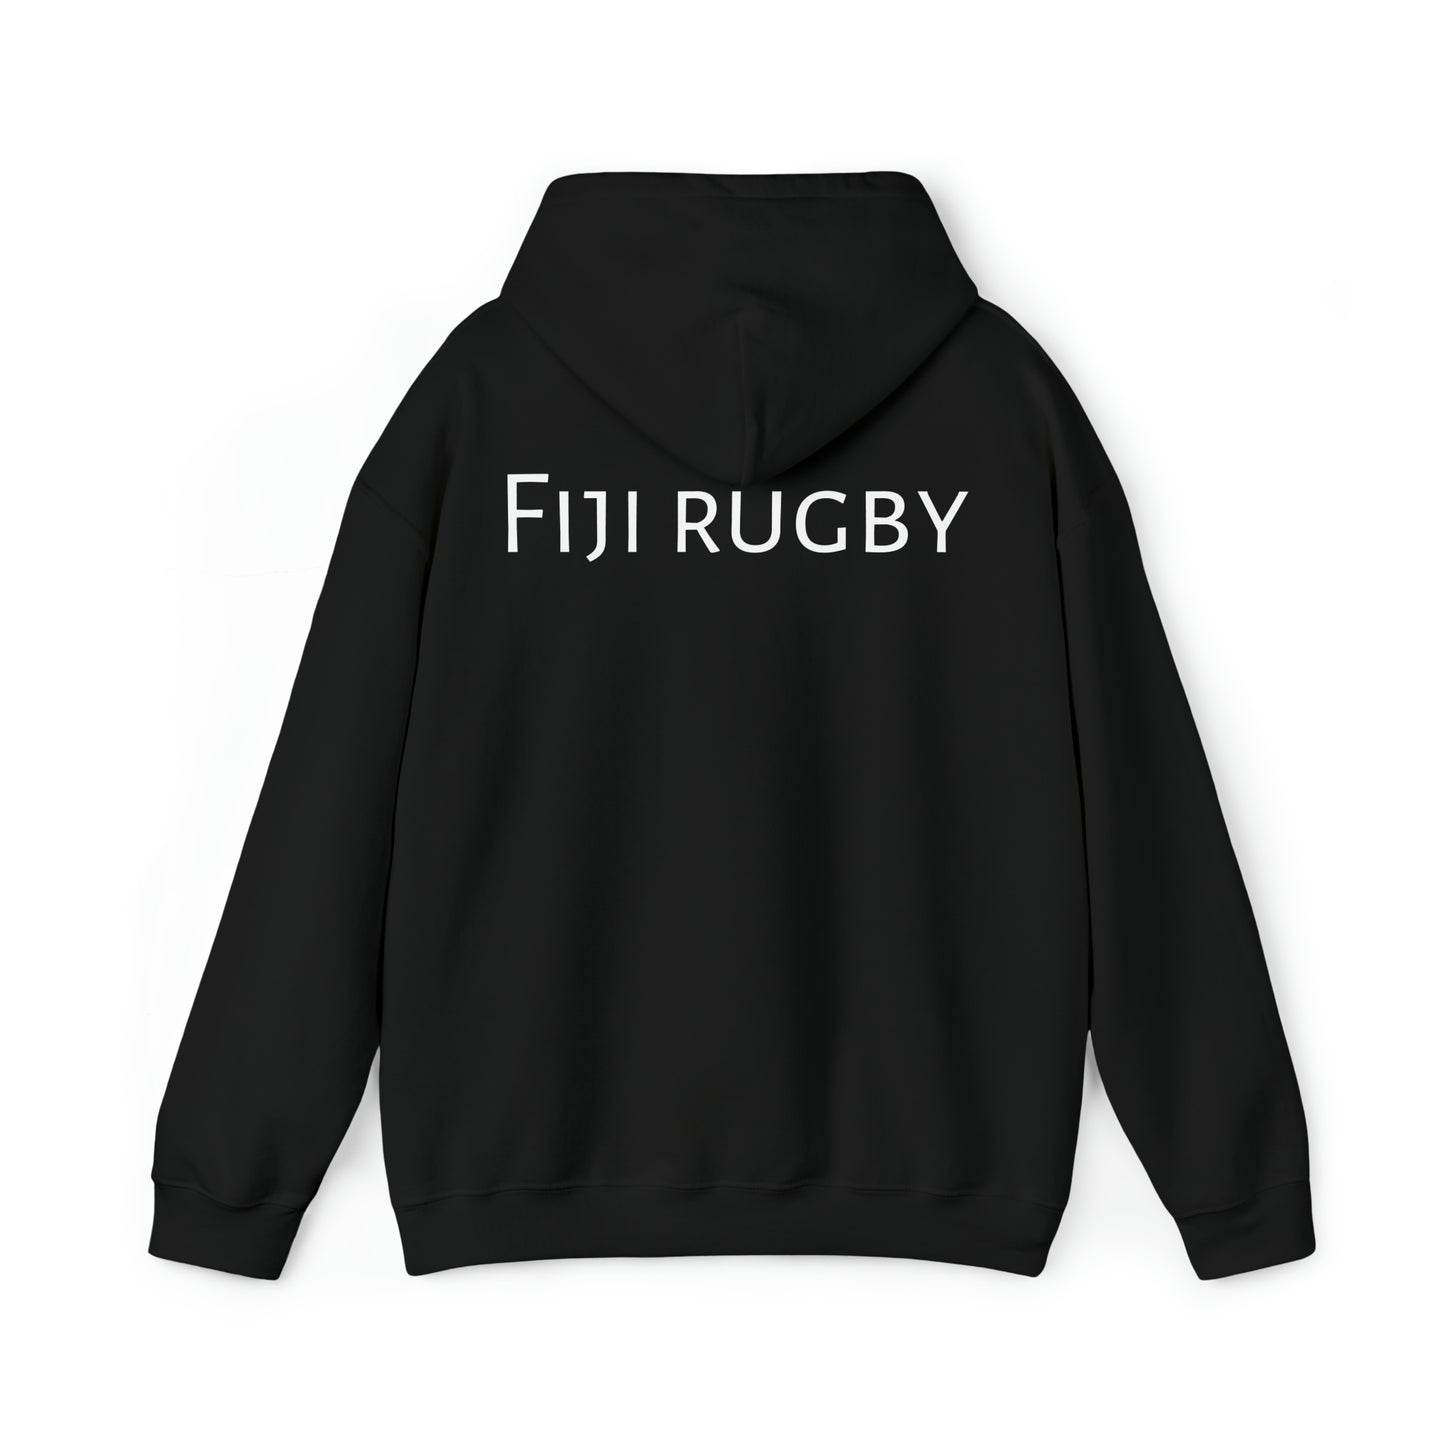 Celebrating Fiji - black hoodie